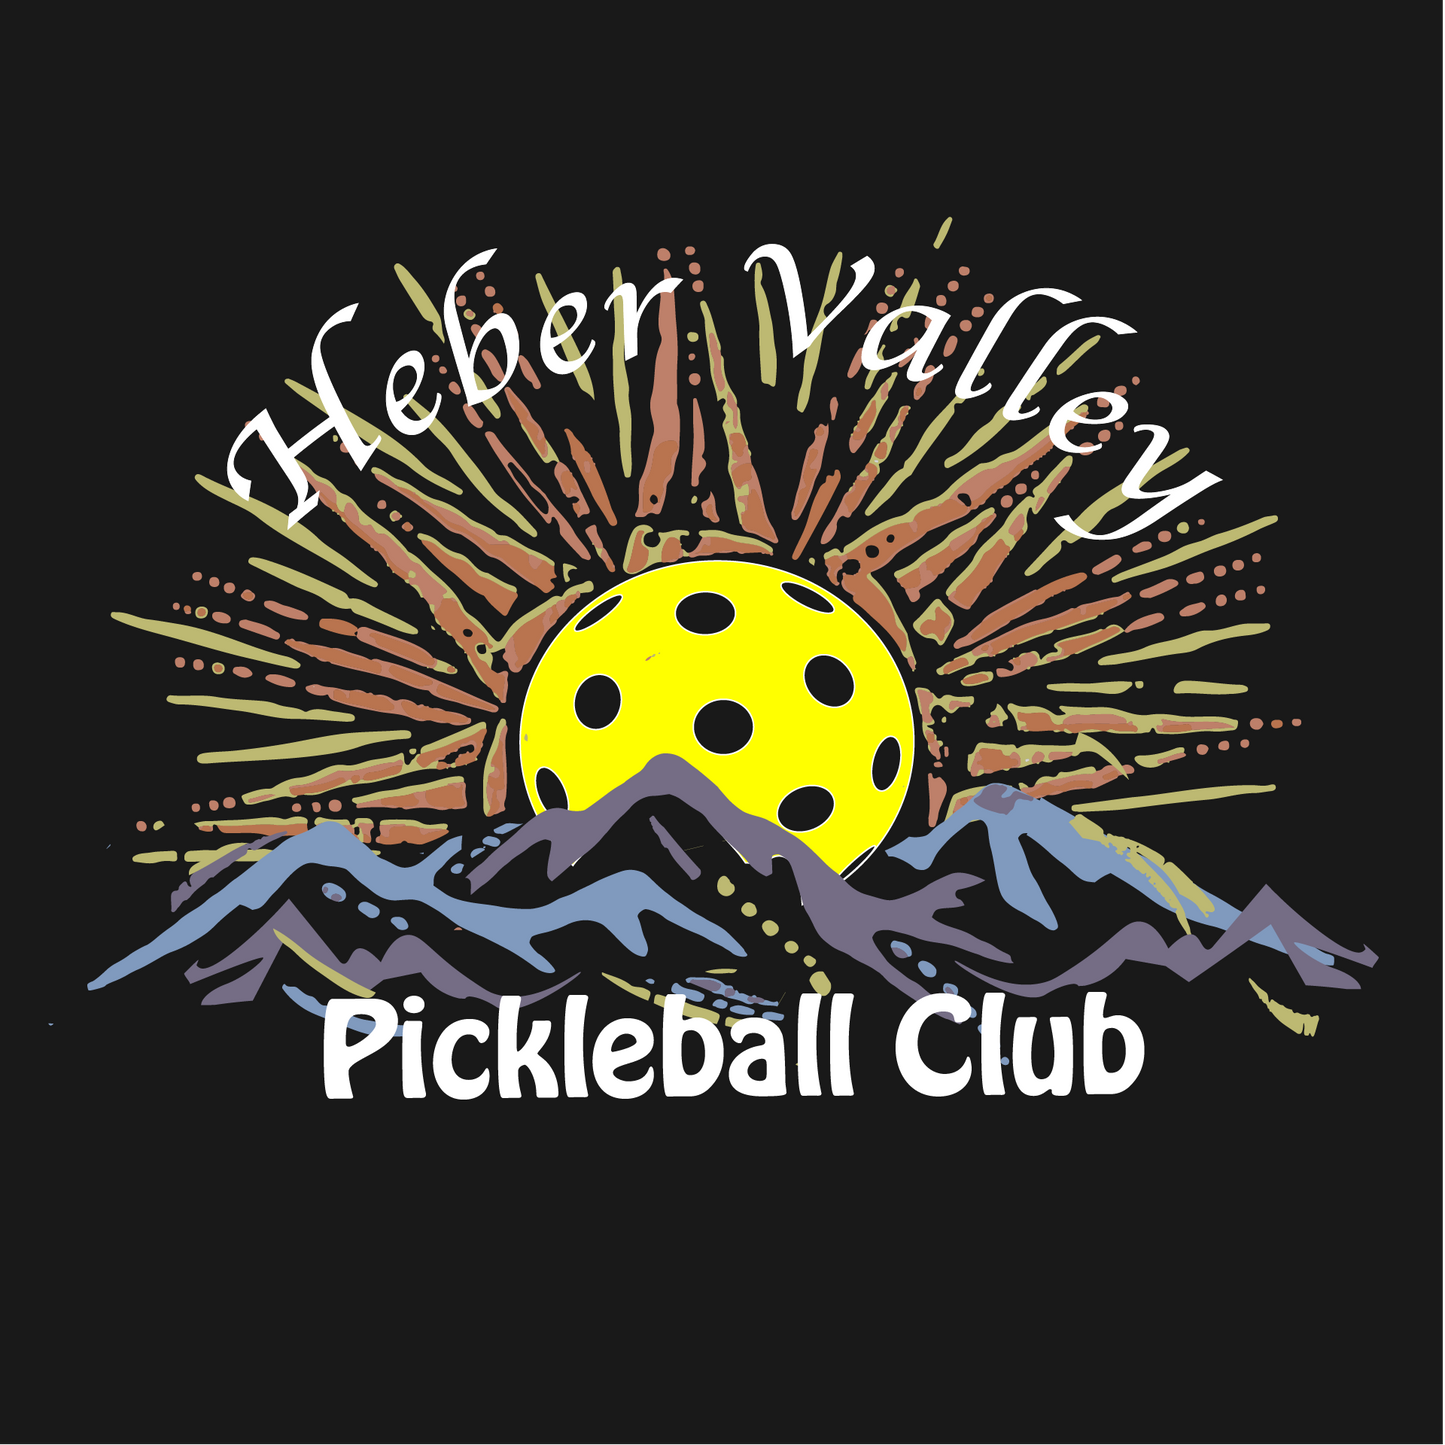 Heber Valley Pickleball Club (Small) | Men's Short Sleeve Pickleball Shirt | 100% Polyester